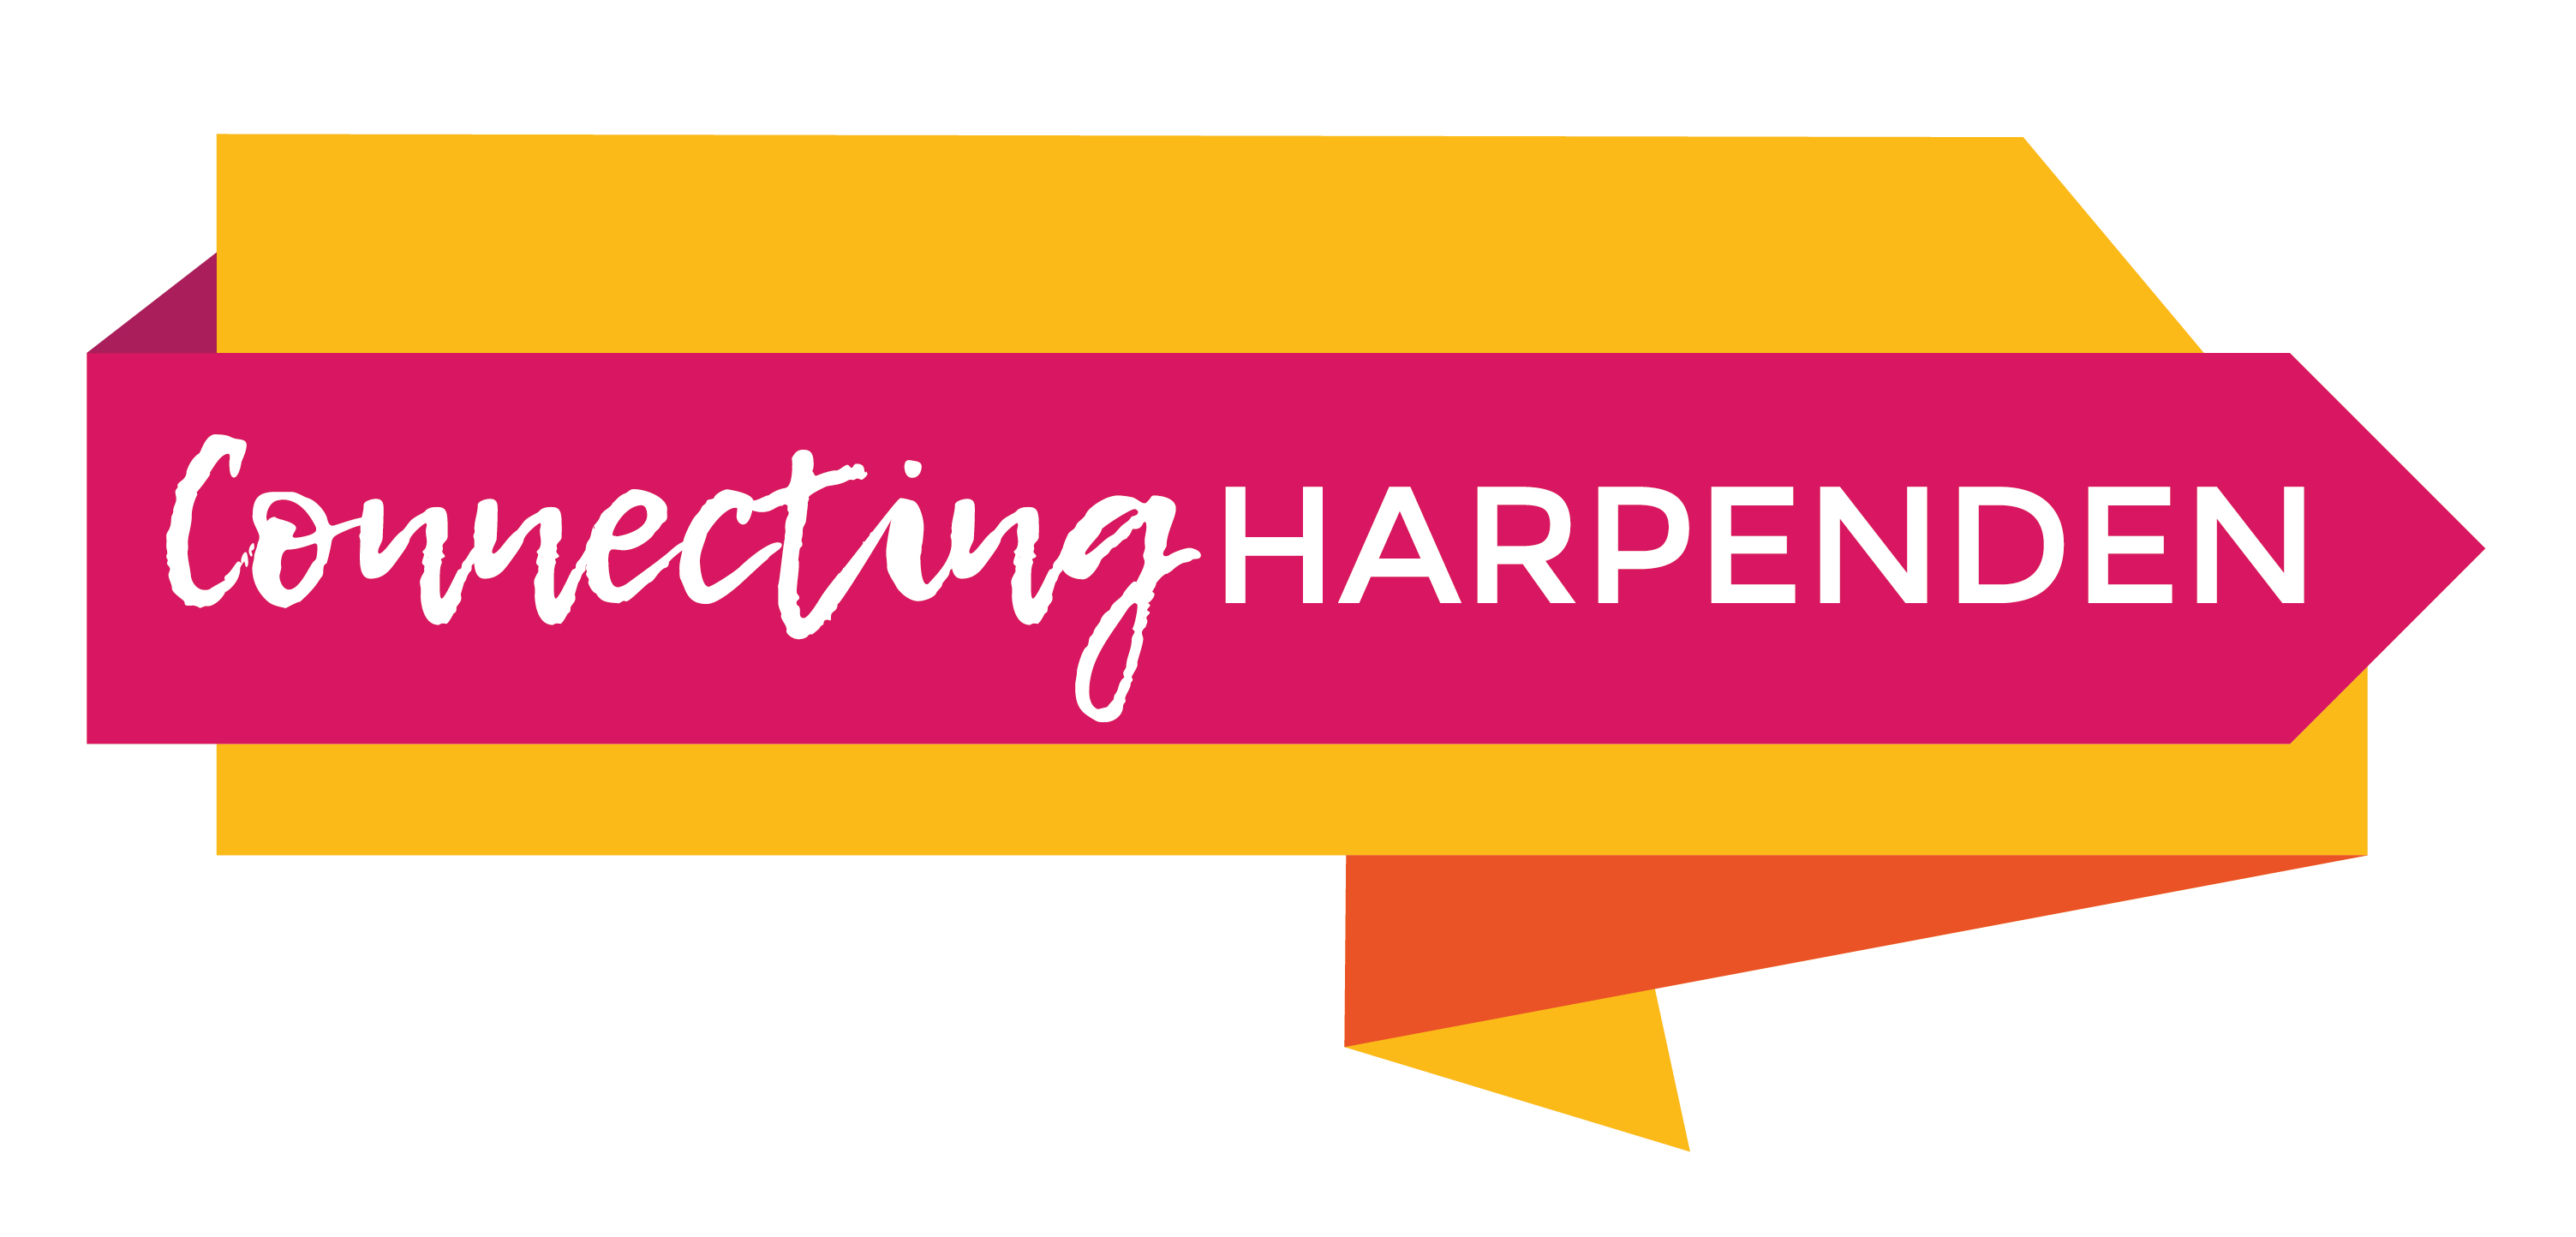 Connecting Harpenden logo